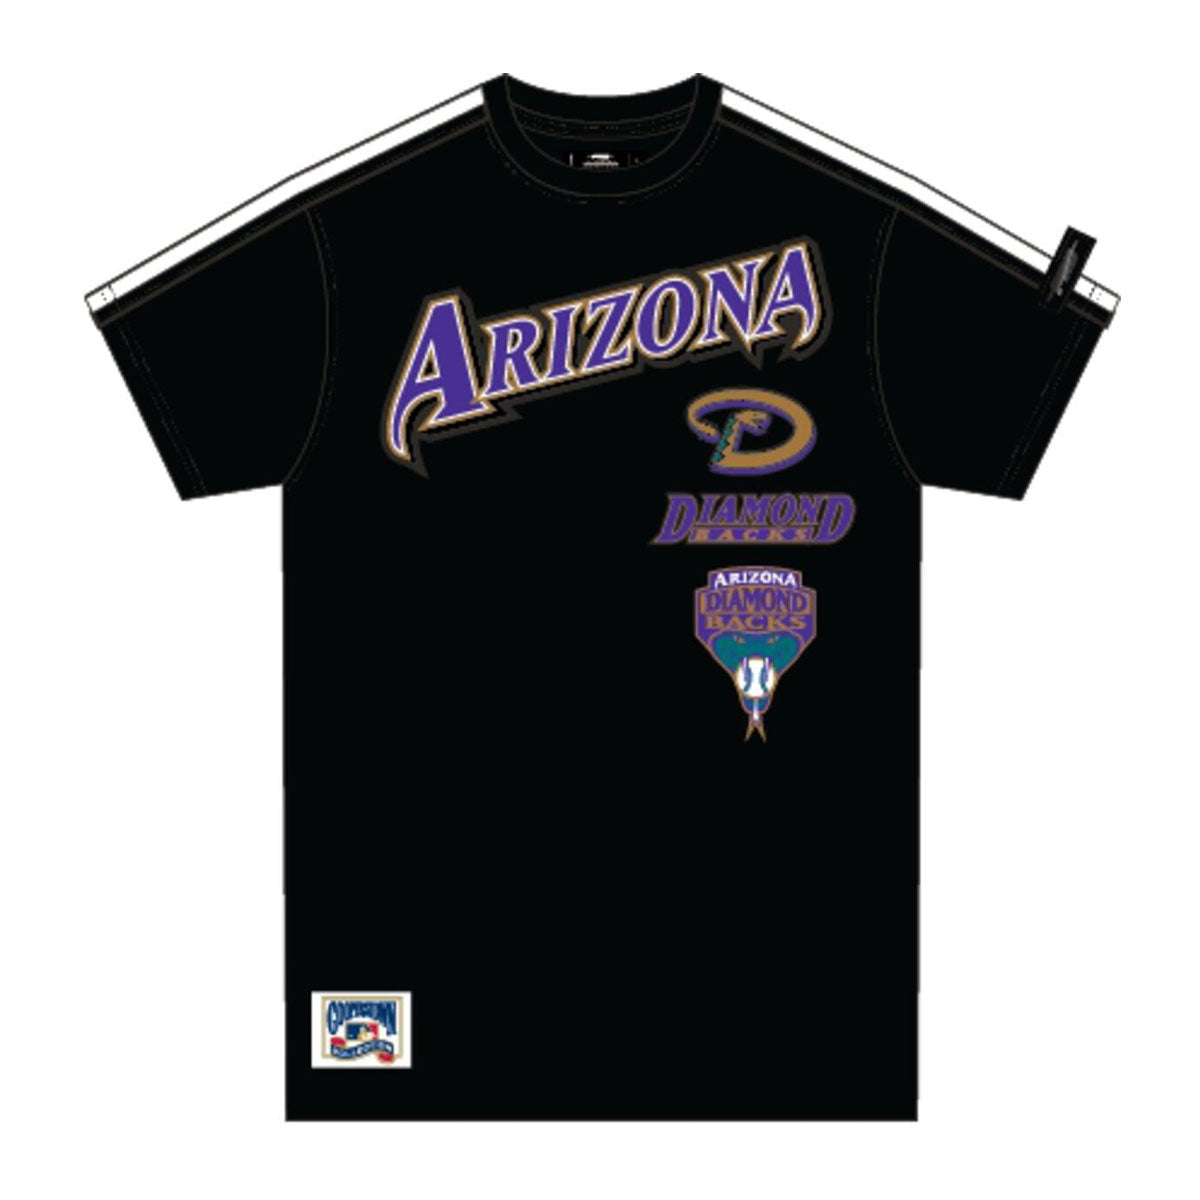 Arizona Diamondbacks Merchandise, Jerseys, Apparel, Clothing